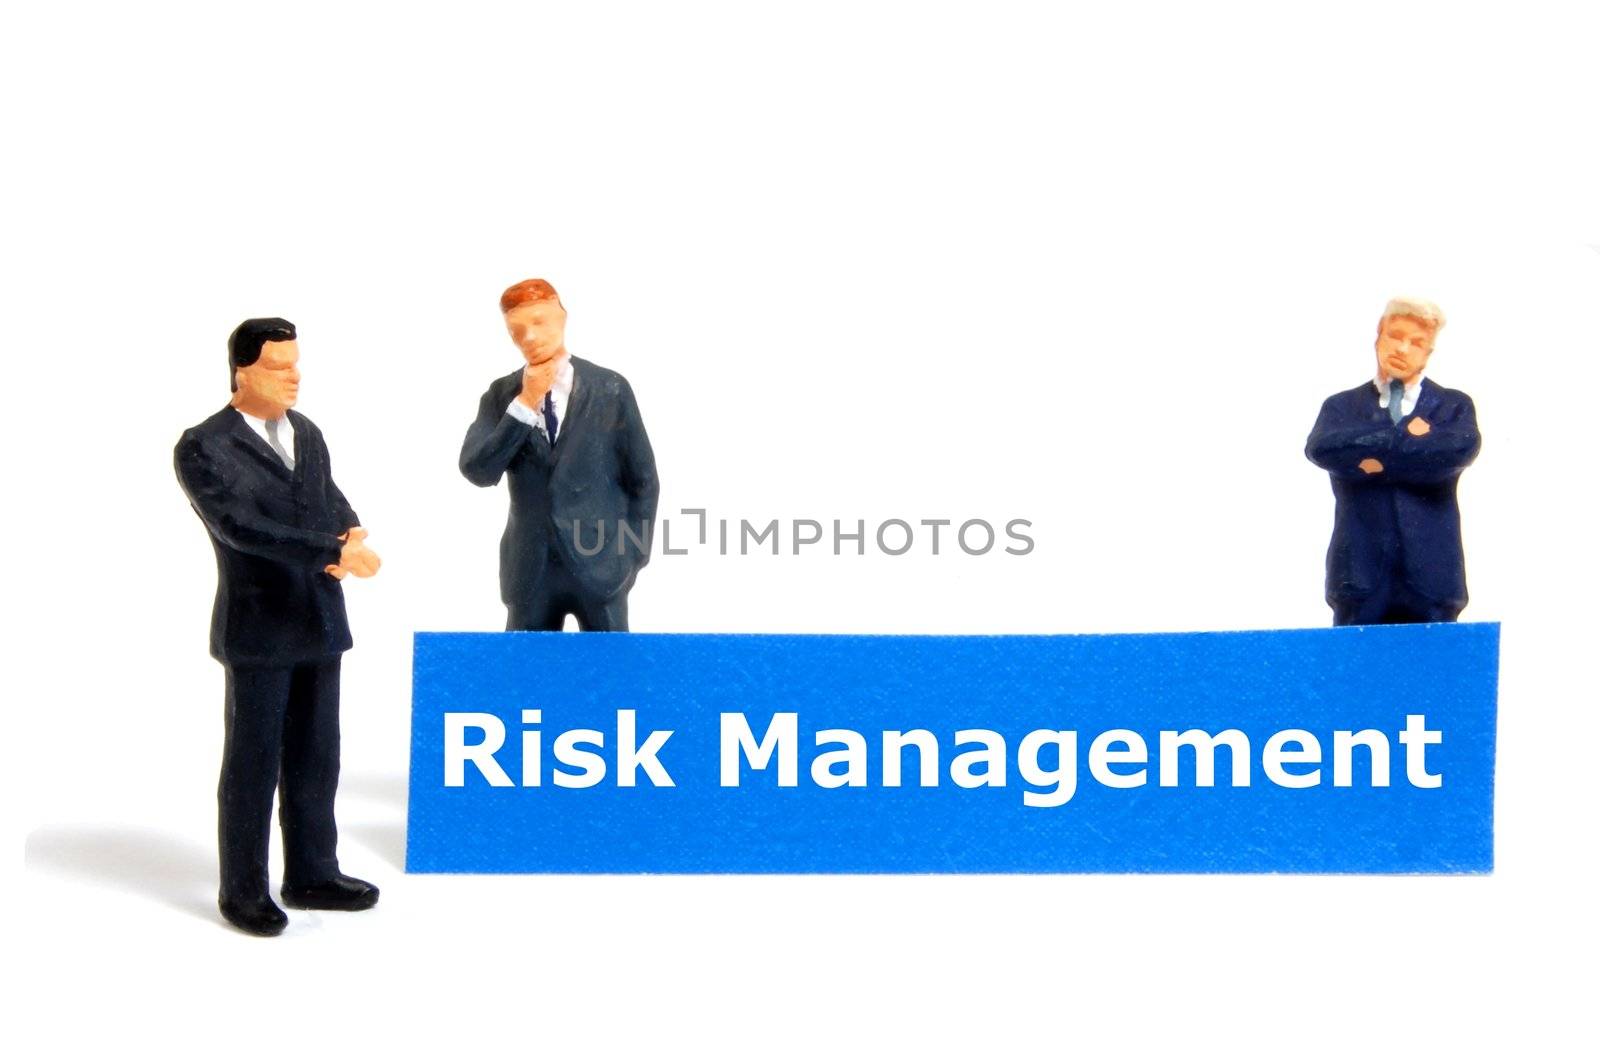 risk management by gunnar3000